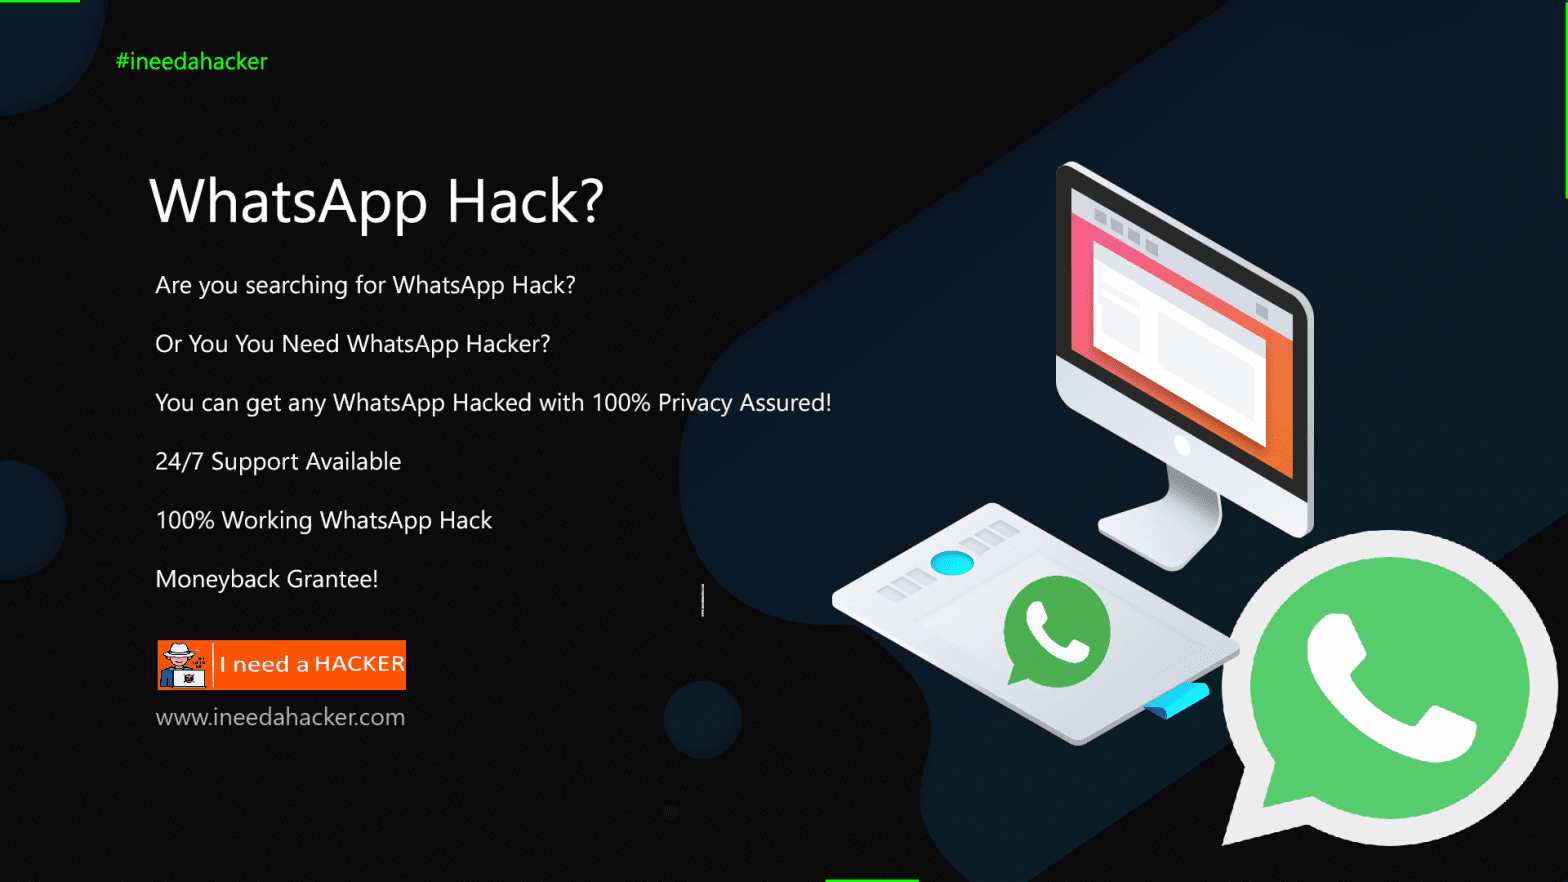 whatsapp hacker for hire